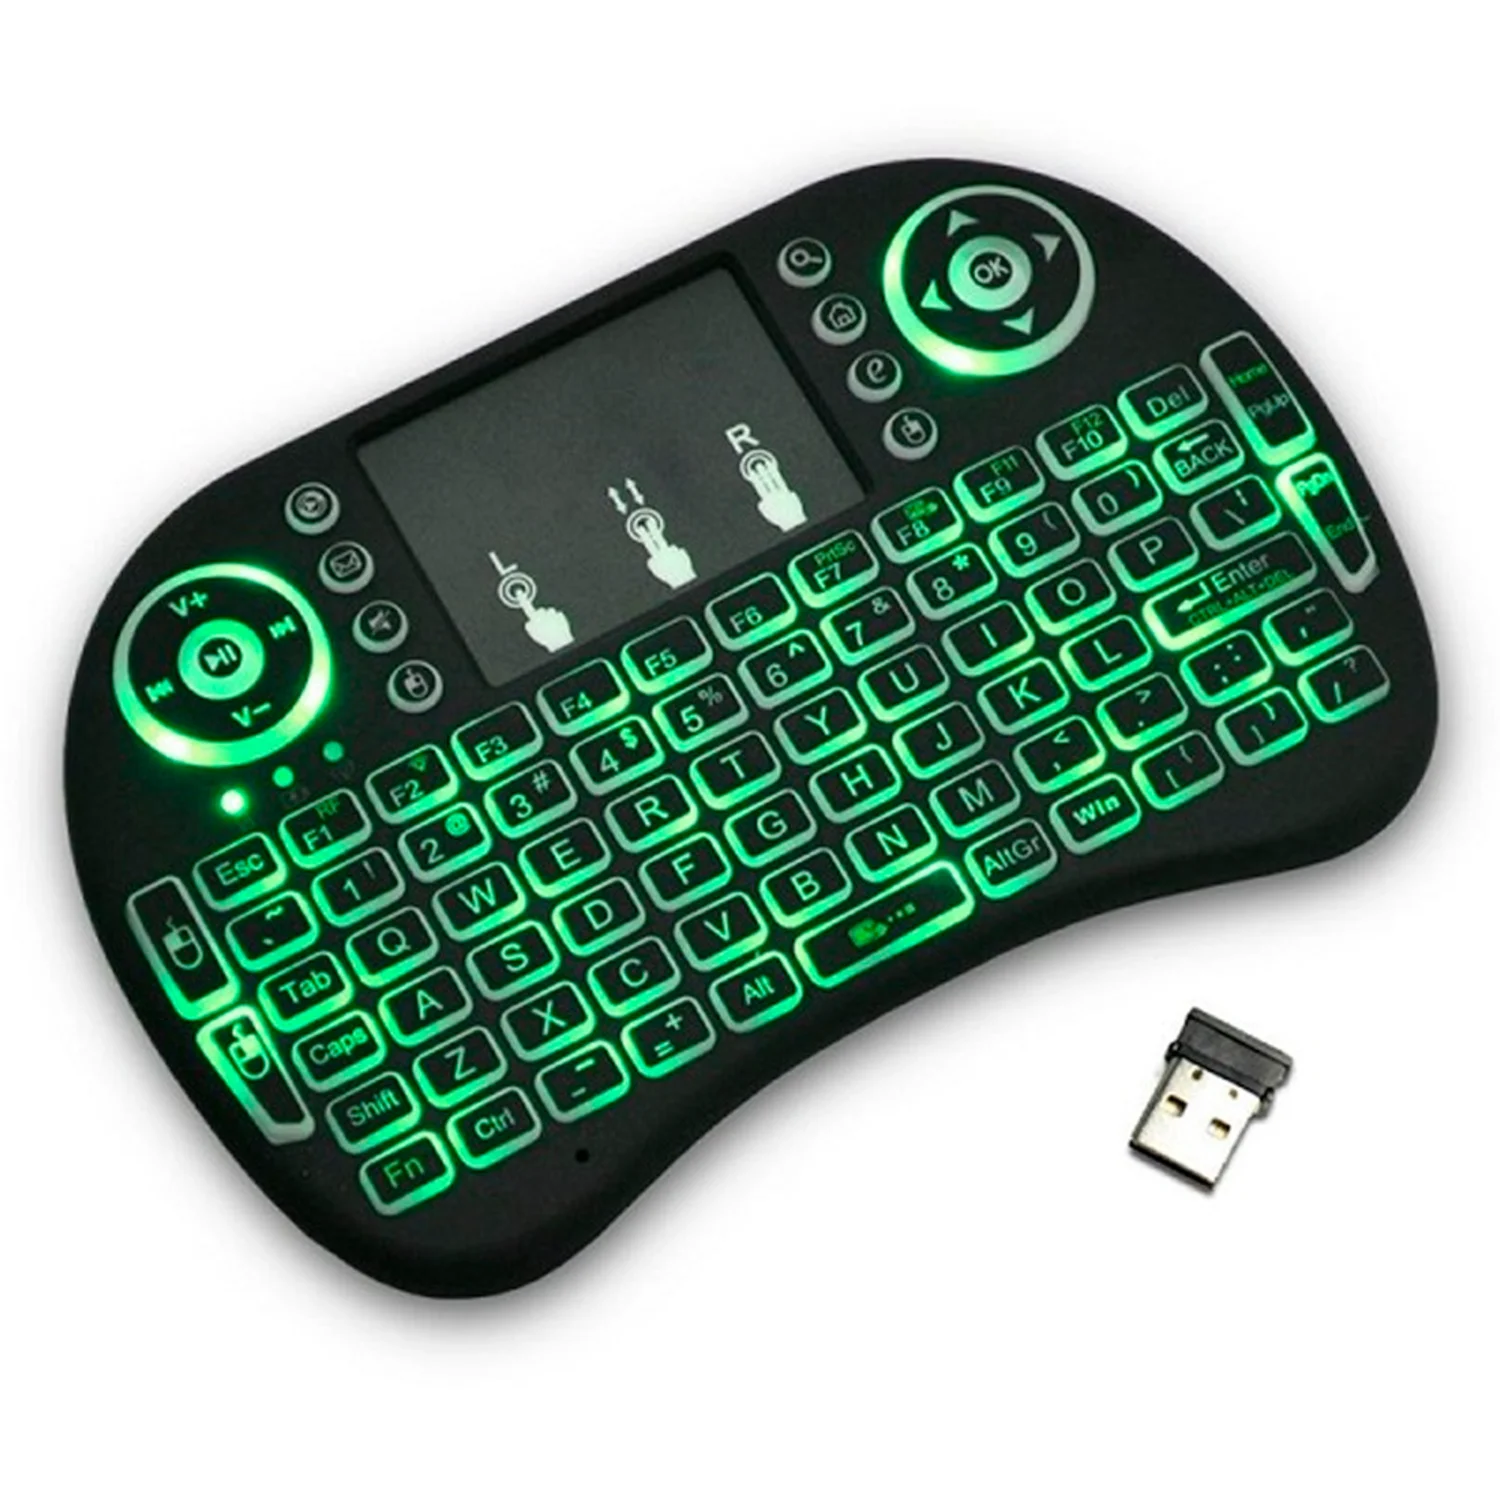 Mini teclado Touchpad Satellite AK-724G / 2.4" - Preto